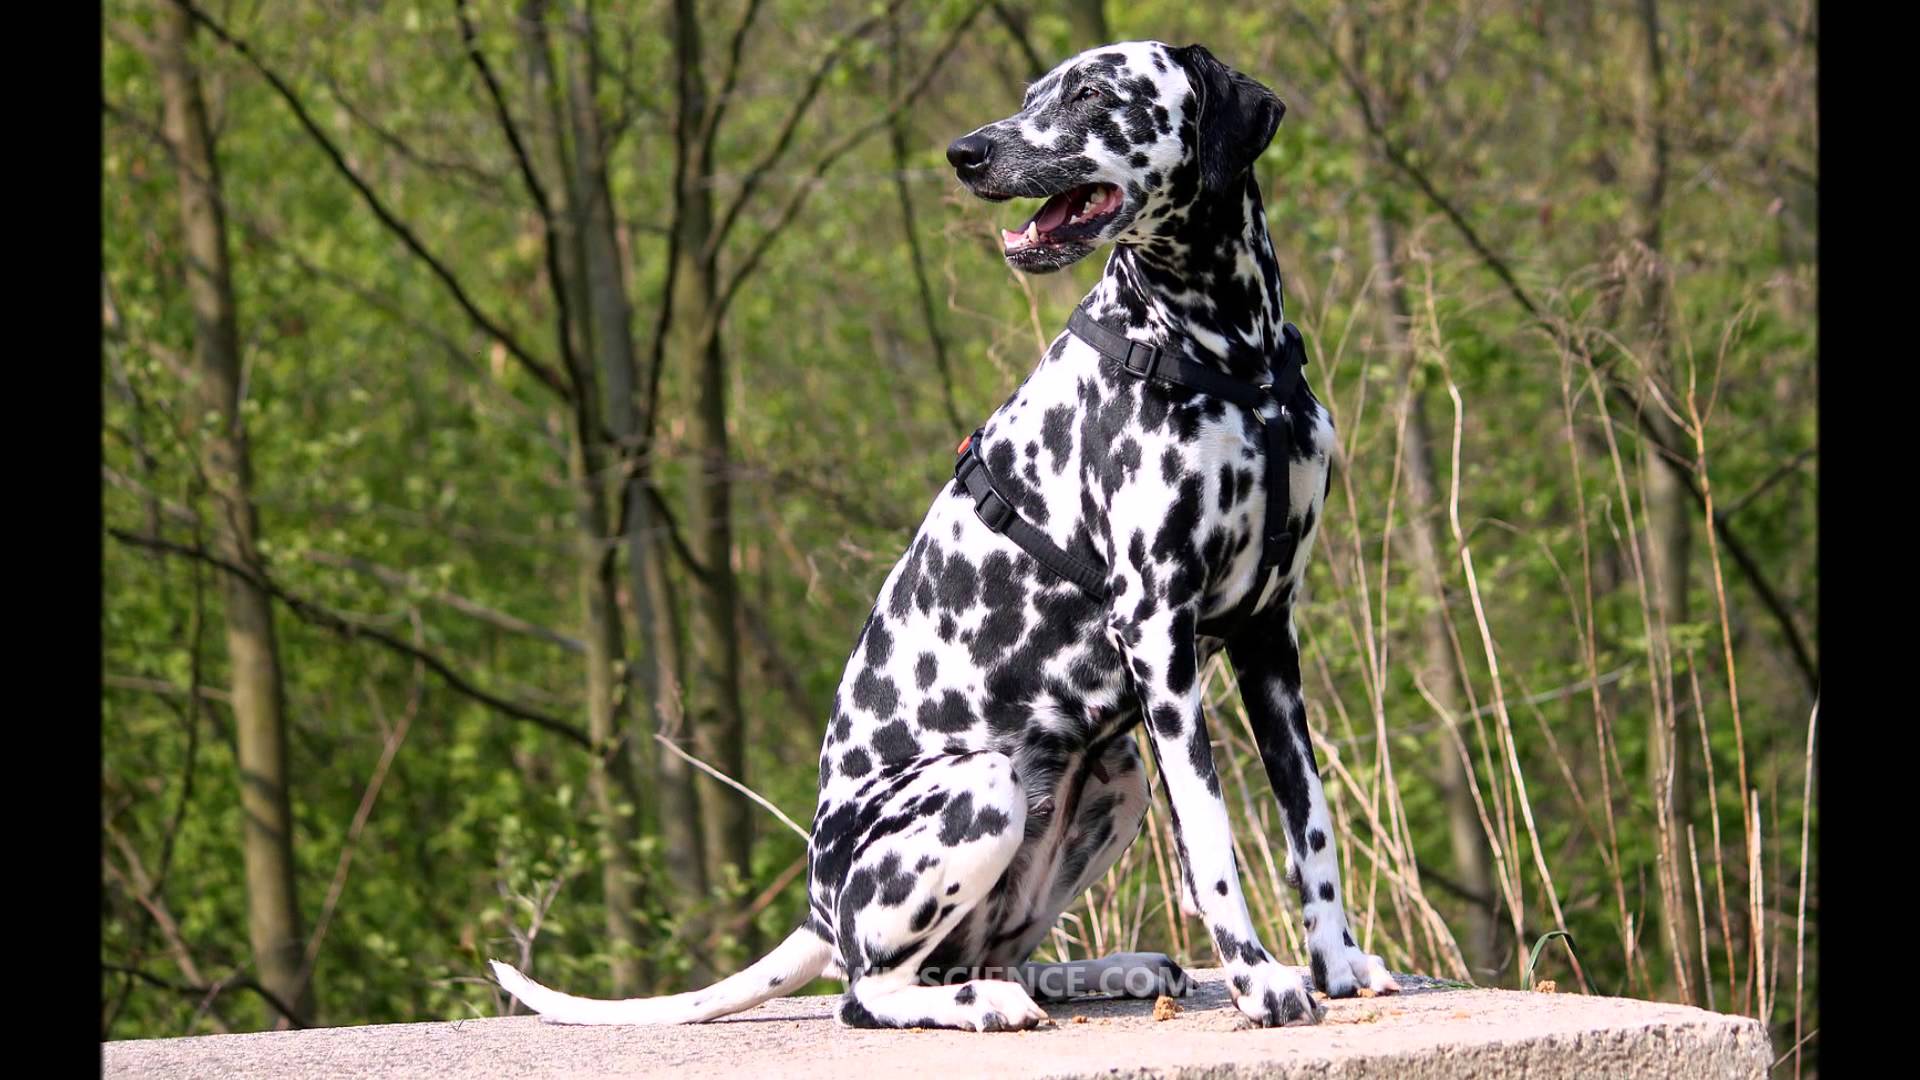 Dalmatian (dog) - Video Learning - WizScience.com - YouTube